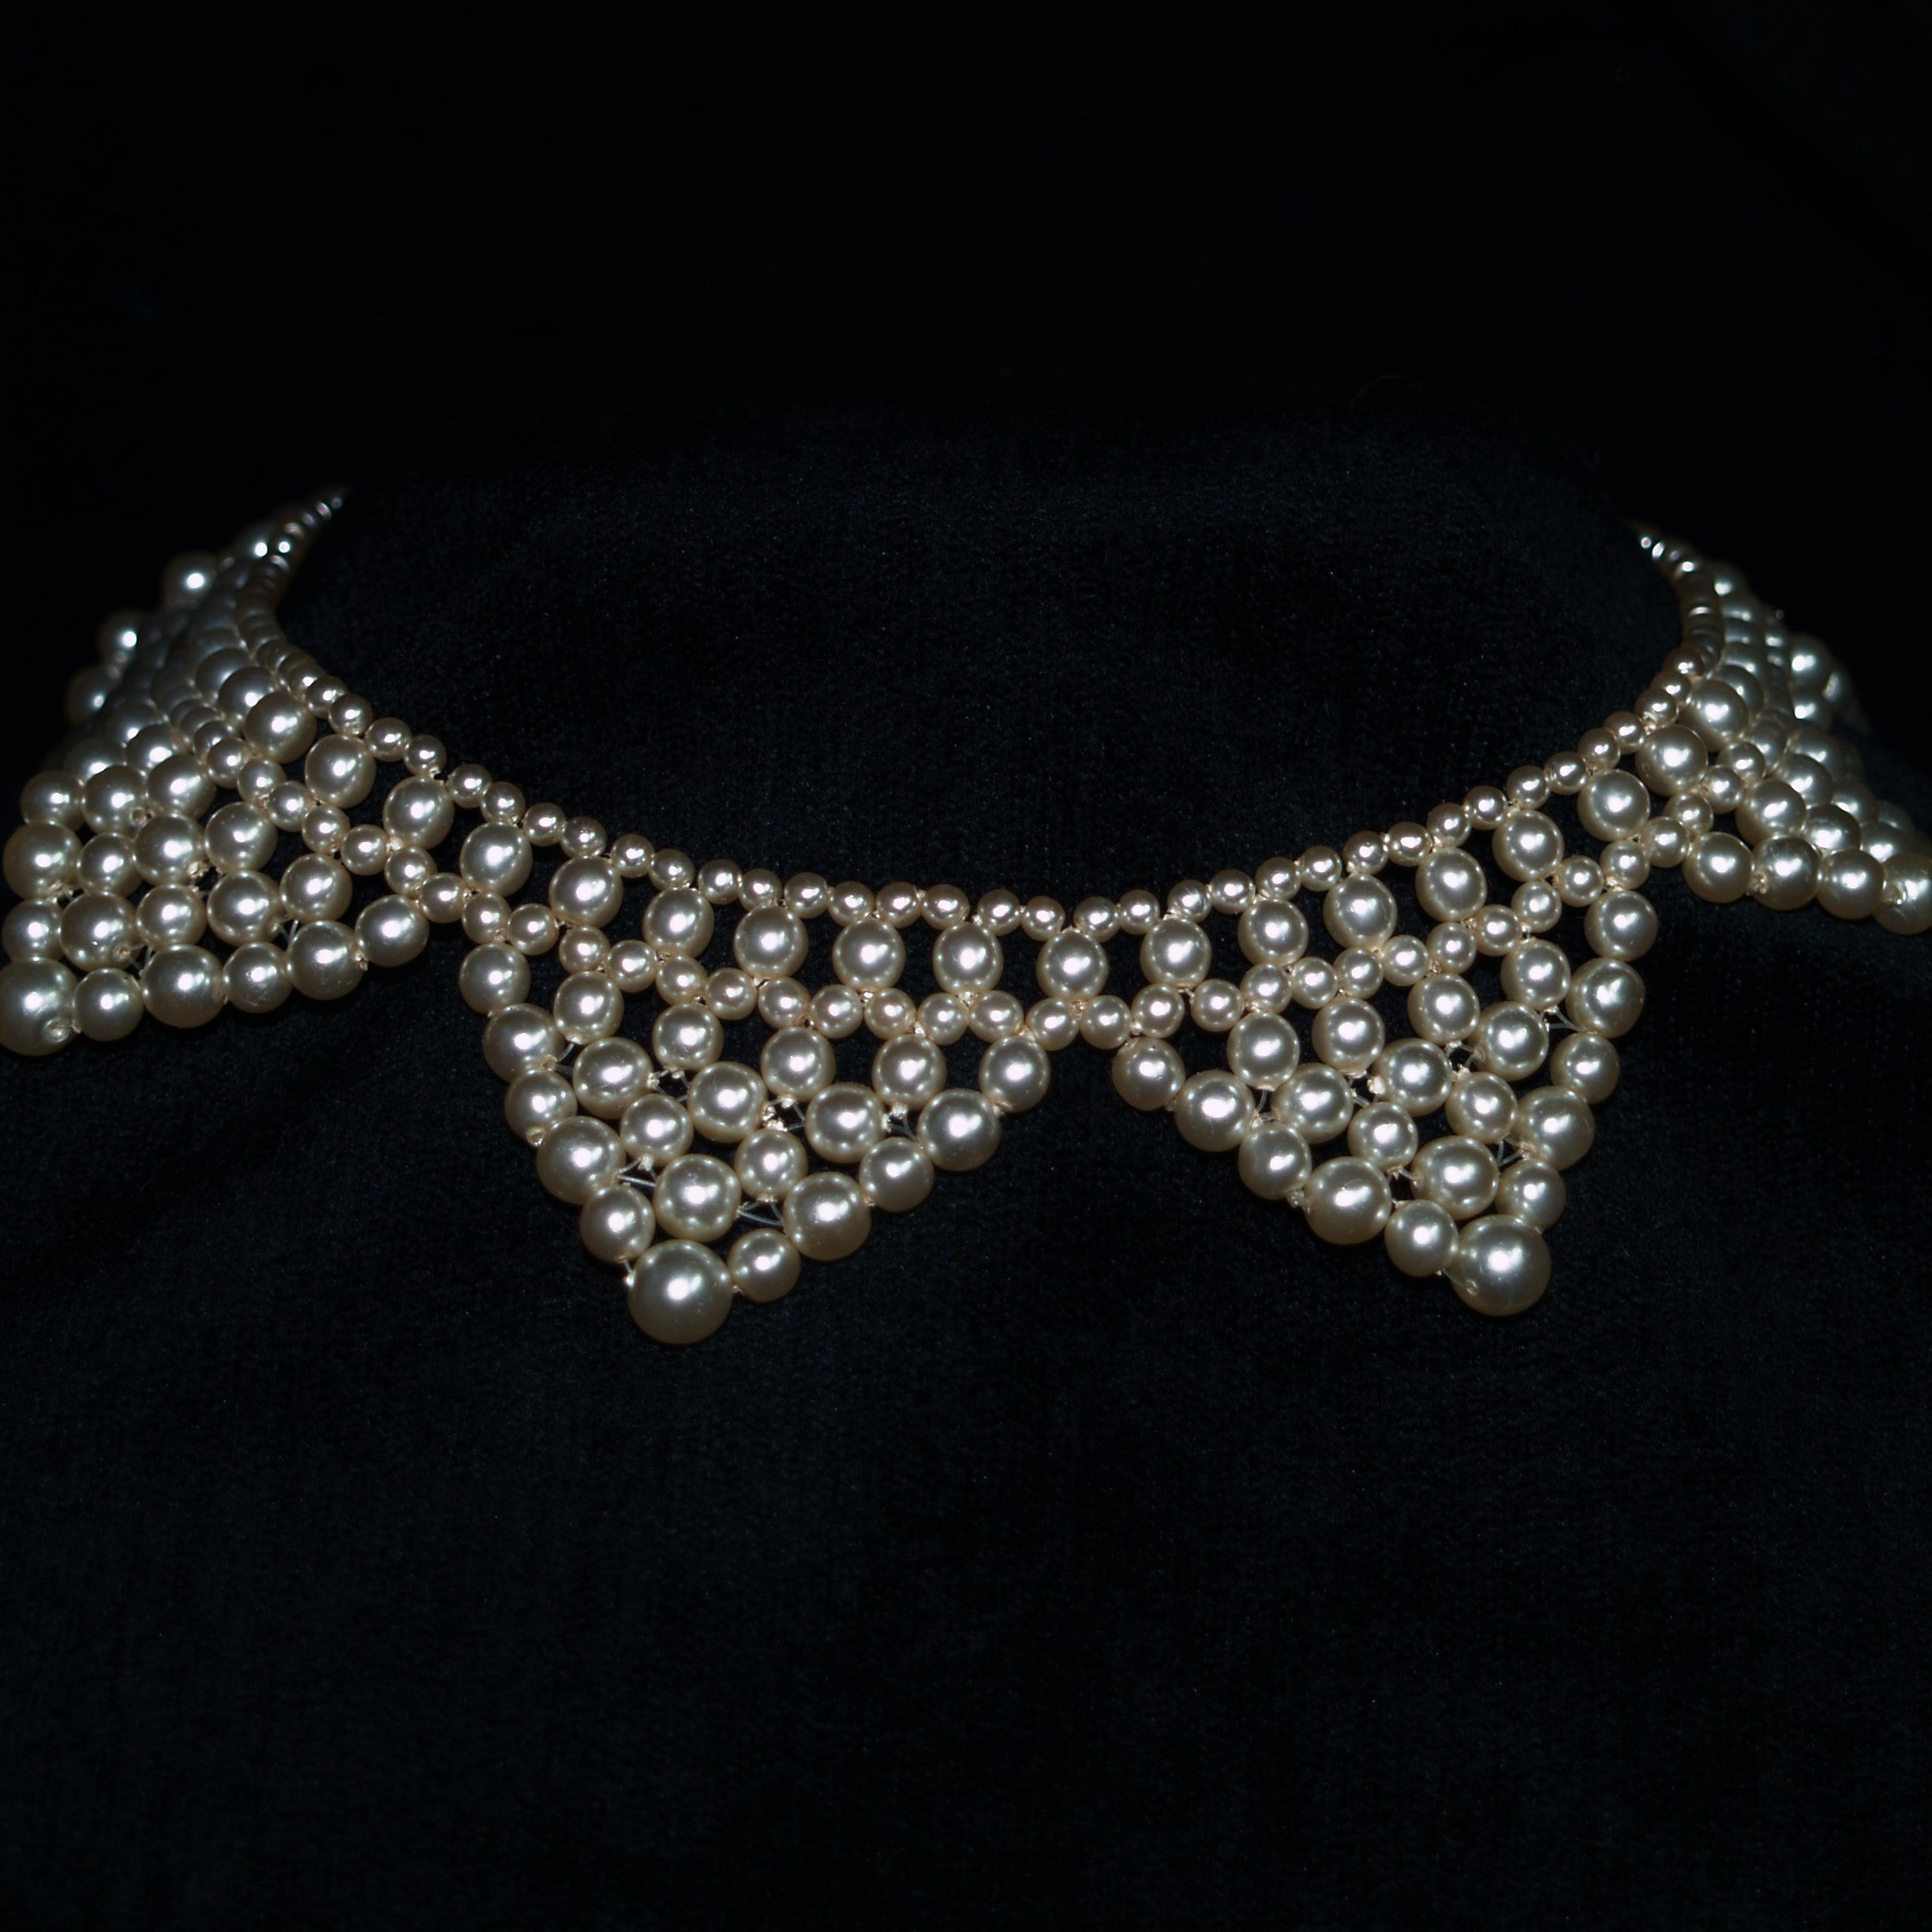 Vintage Faux Pearl Collar Necklace.